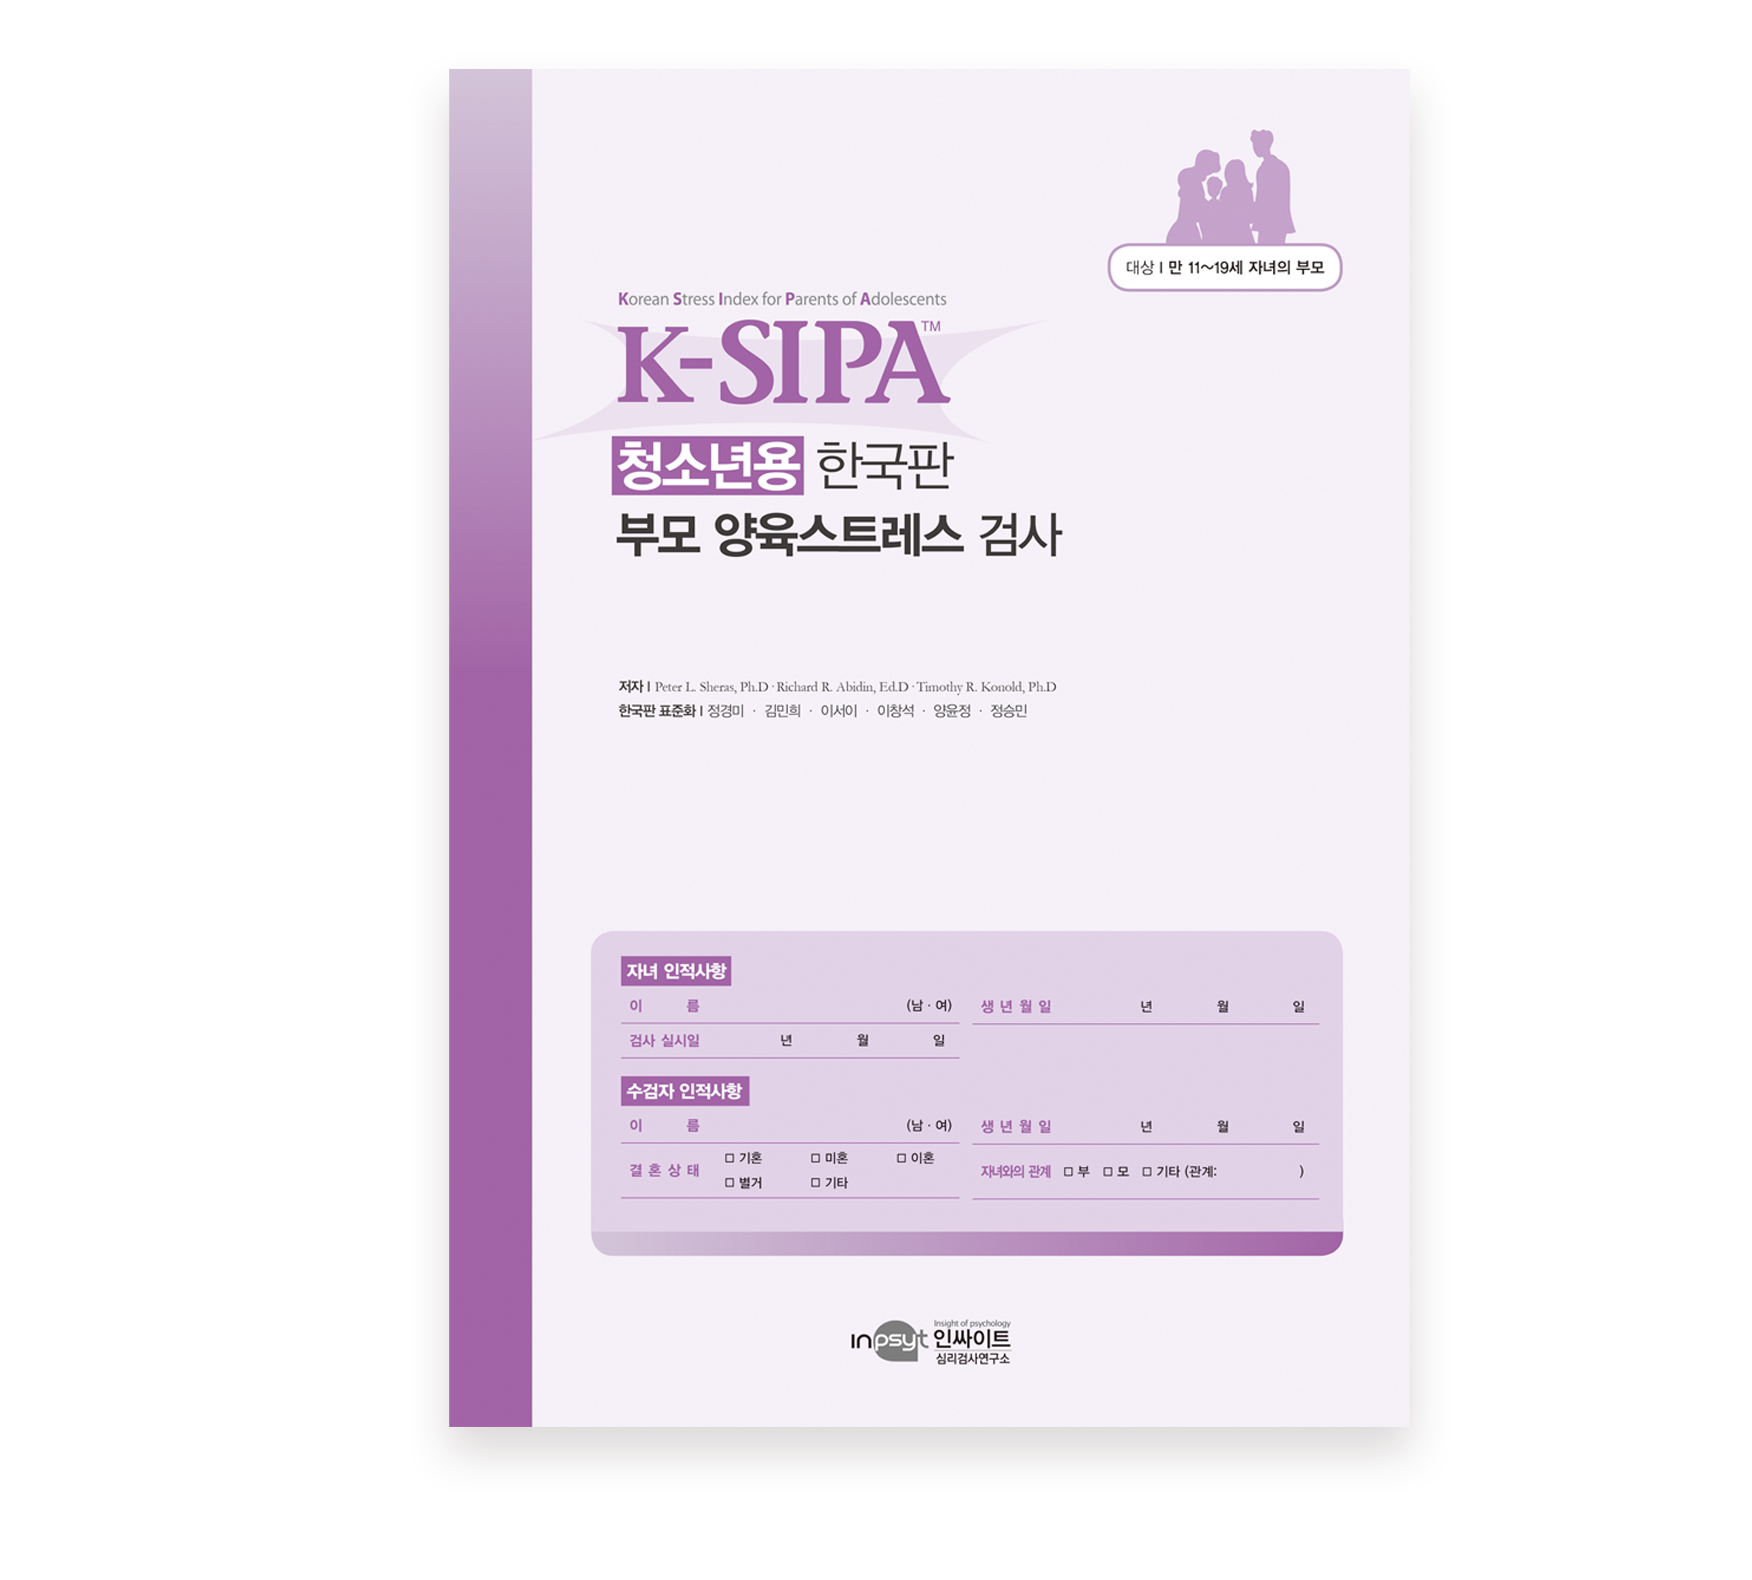 K-SIPA청소년용한국판부모양육스트레스검사[웹용]-검사지.jpg